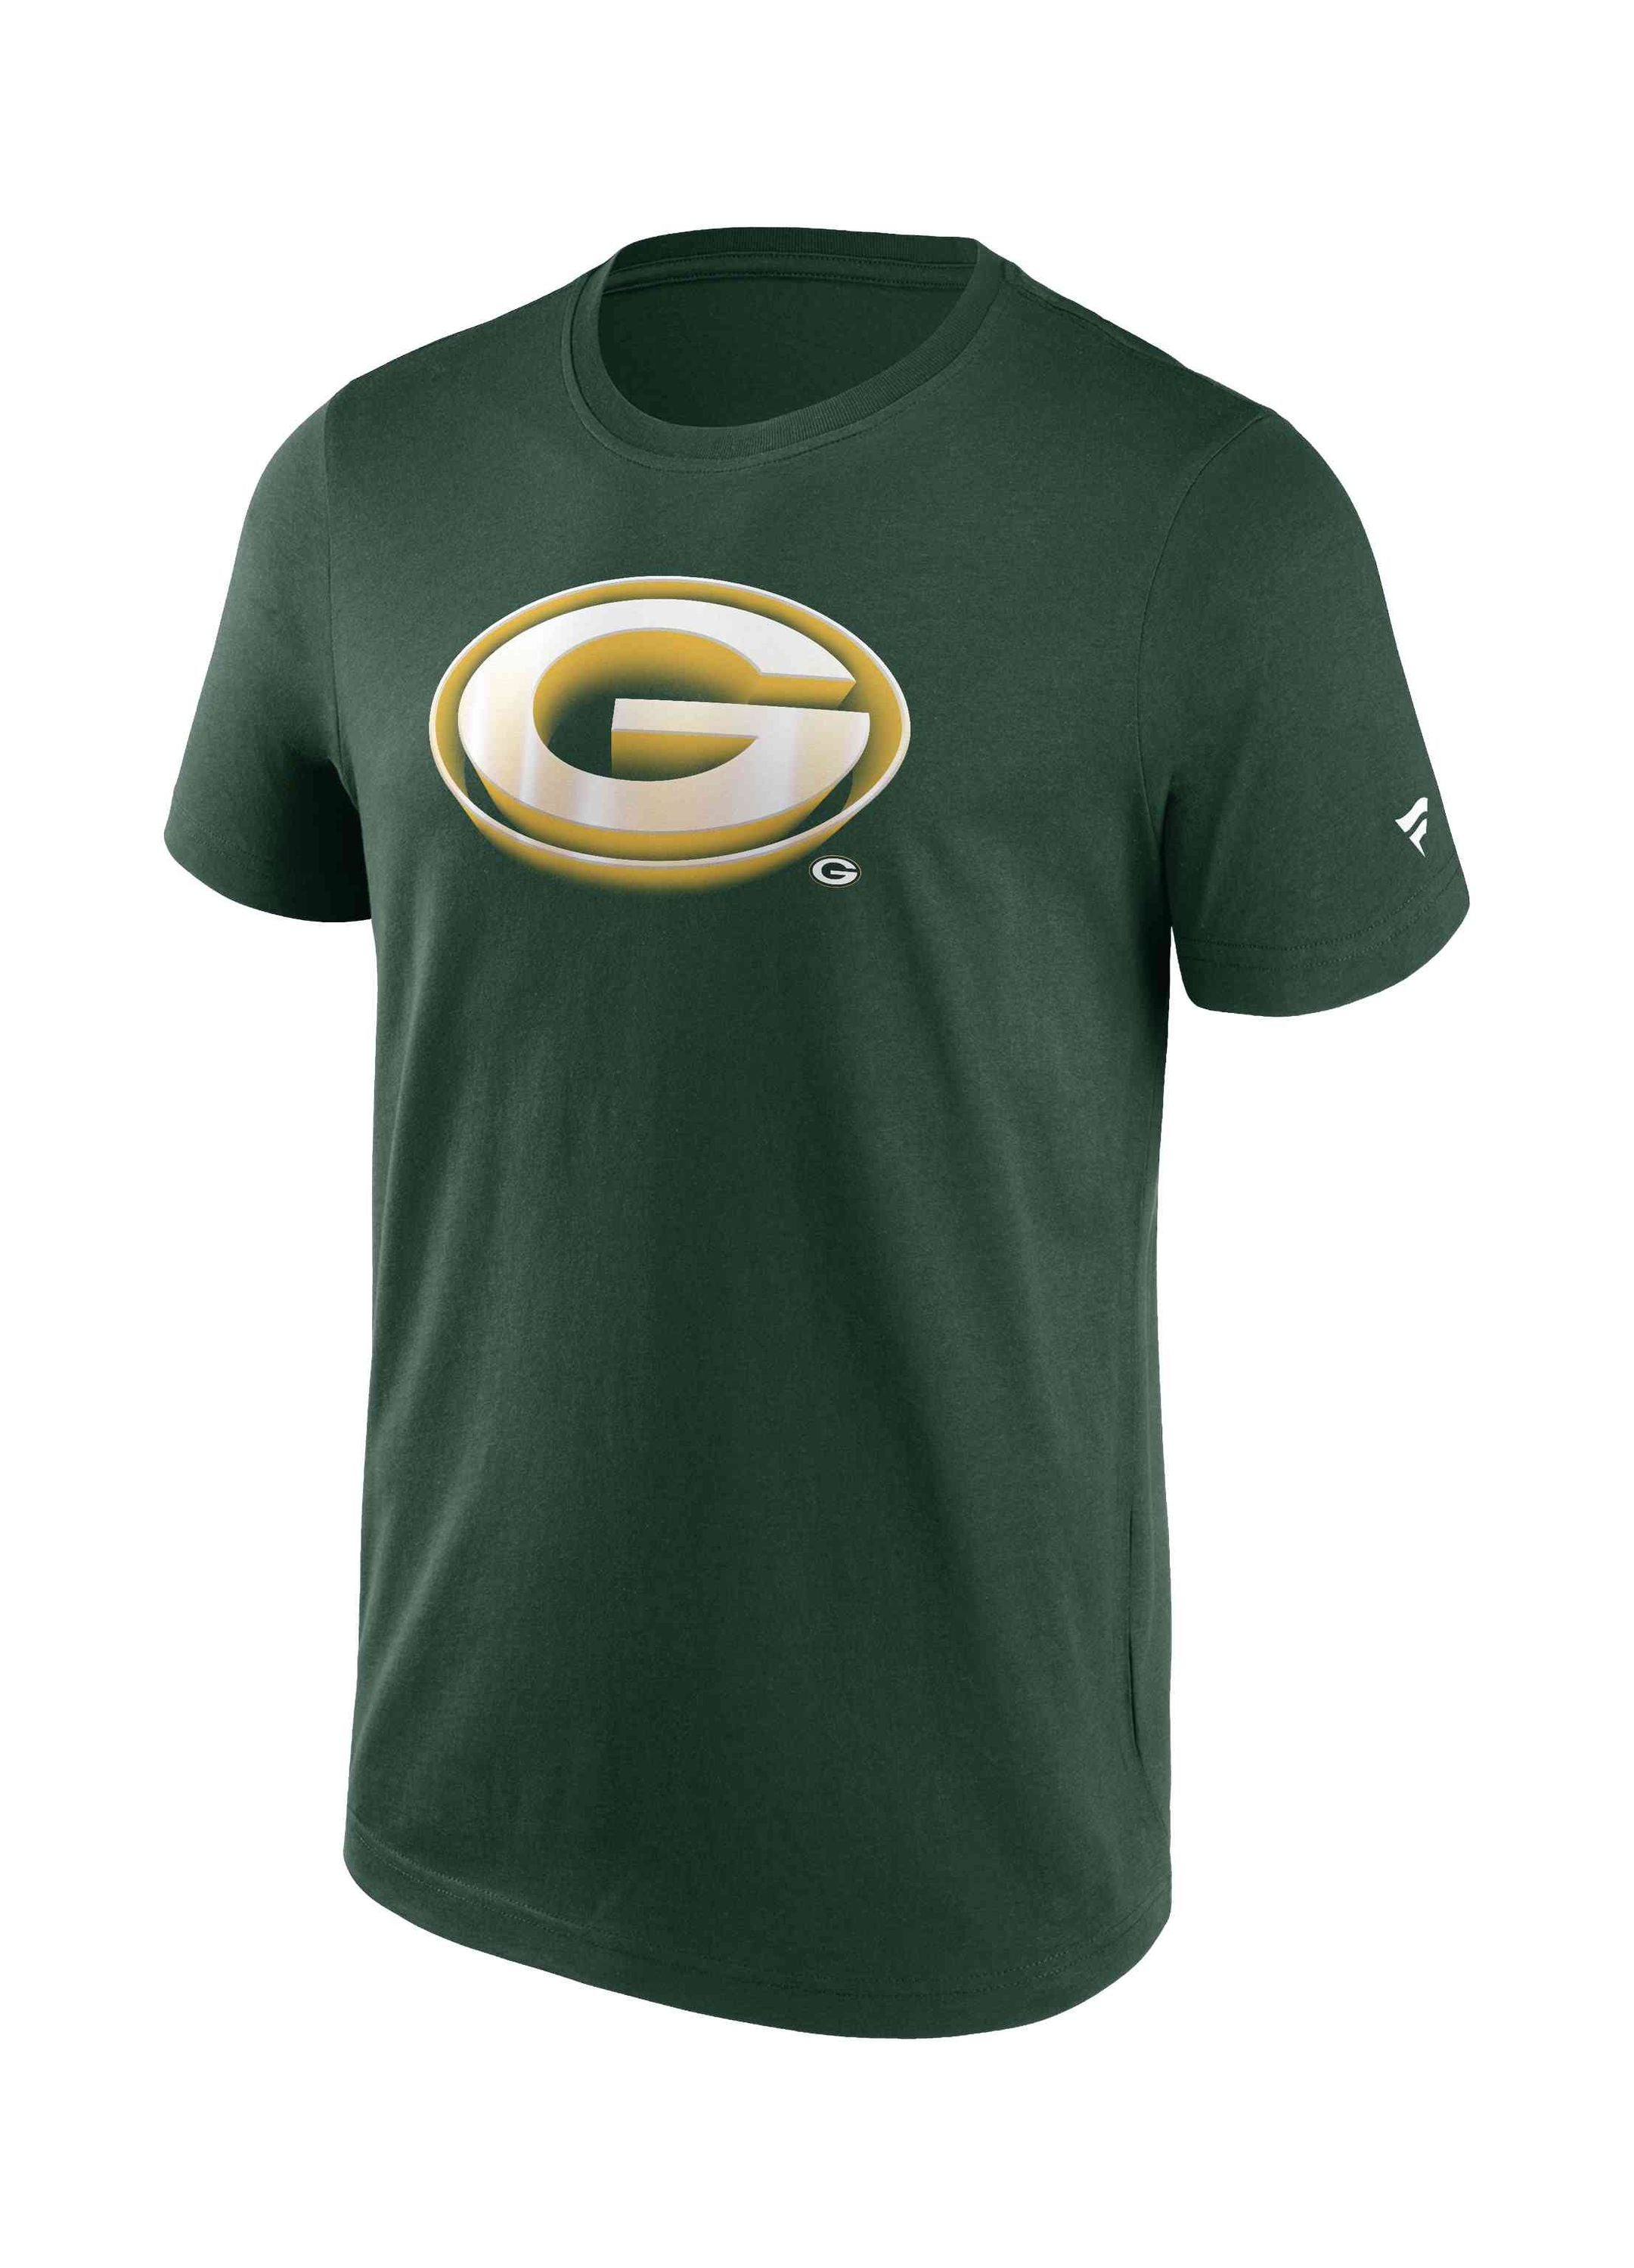 Fanatics - NFL Green Bay Packers Chrome Graphic T-Shirt